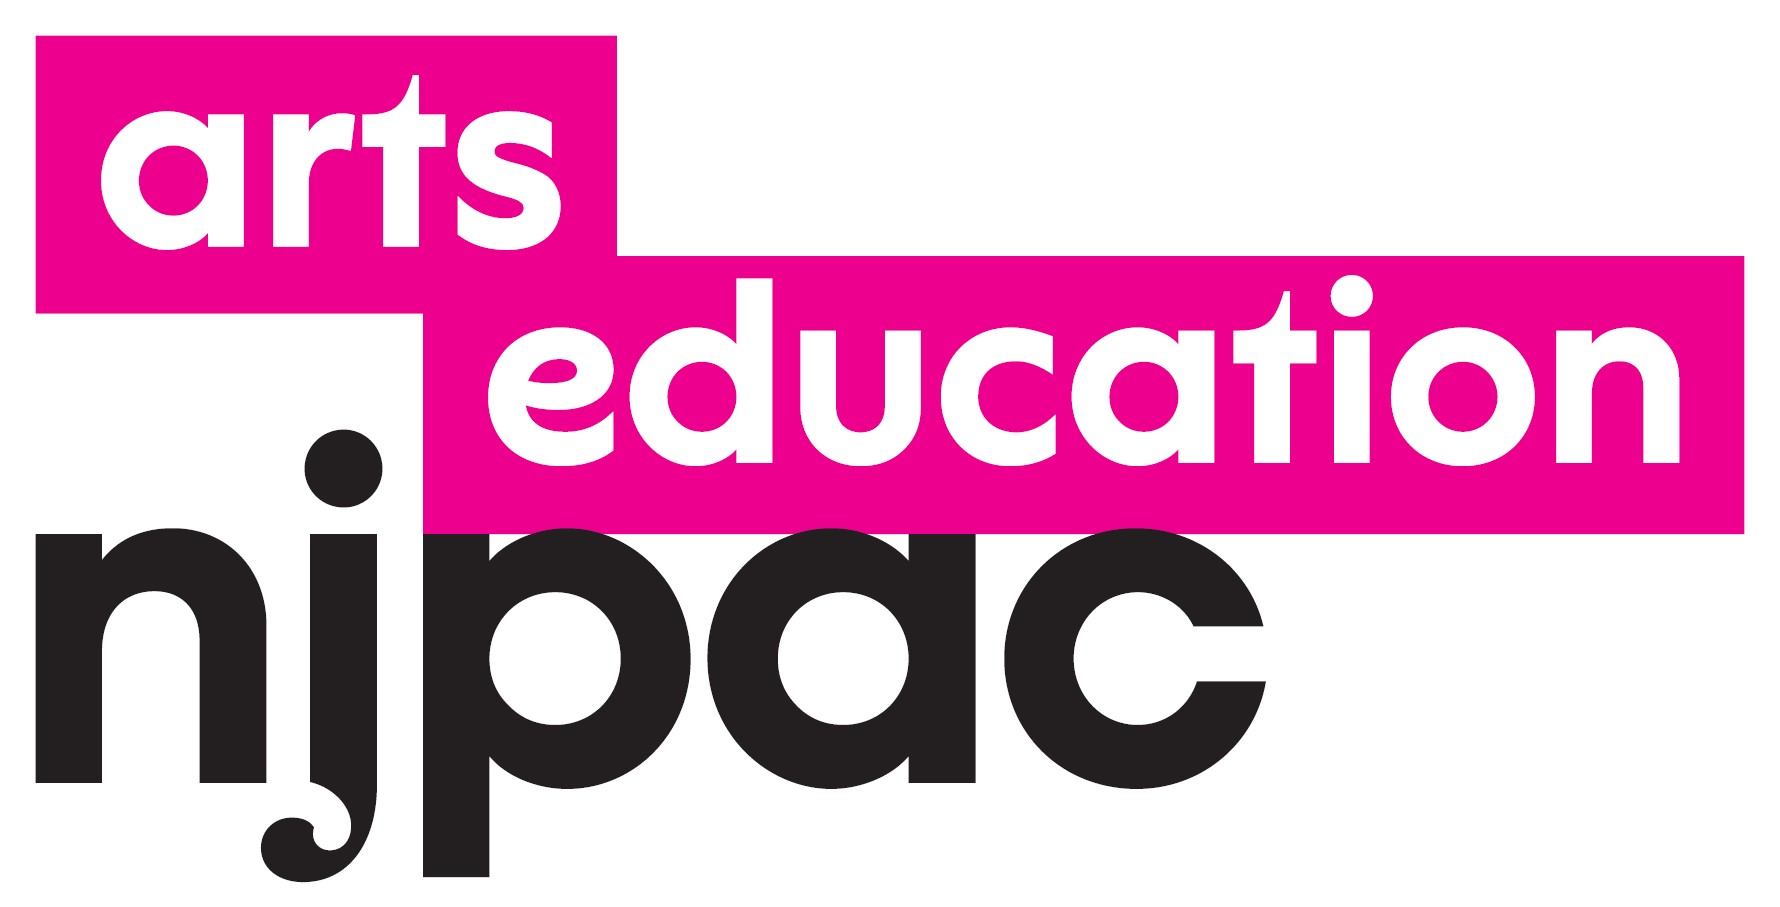 NJPAC Arts Education Logo